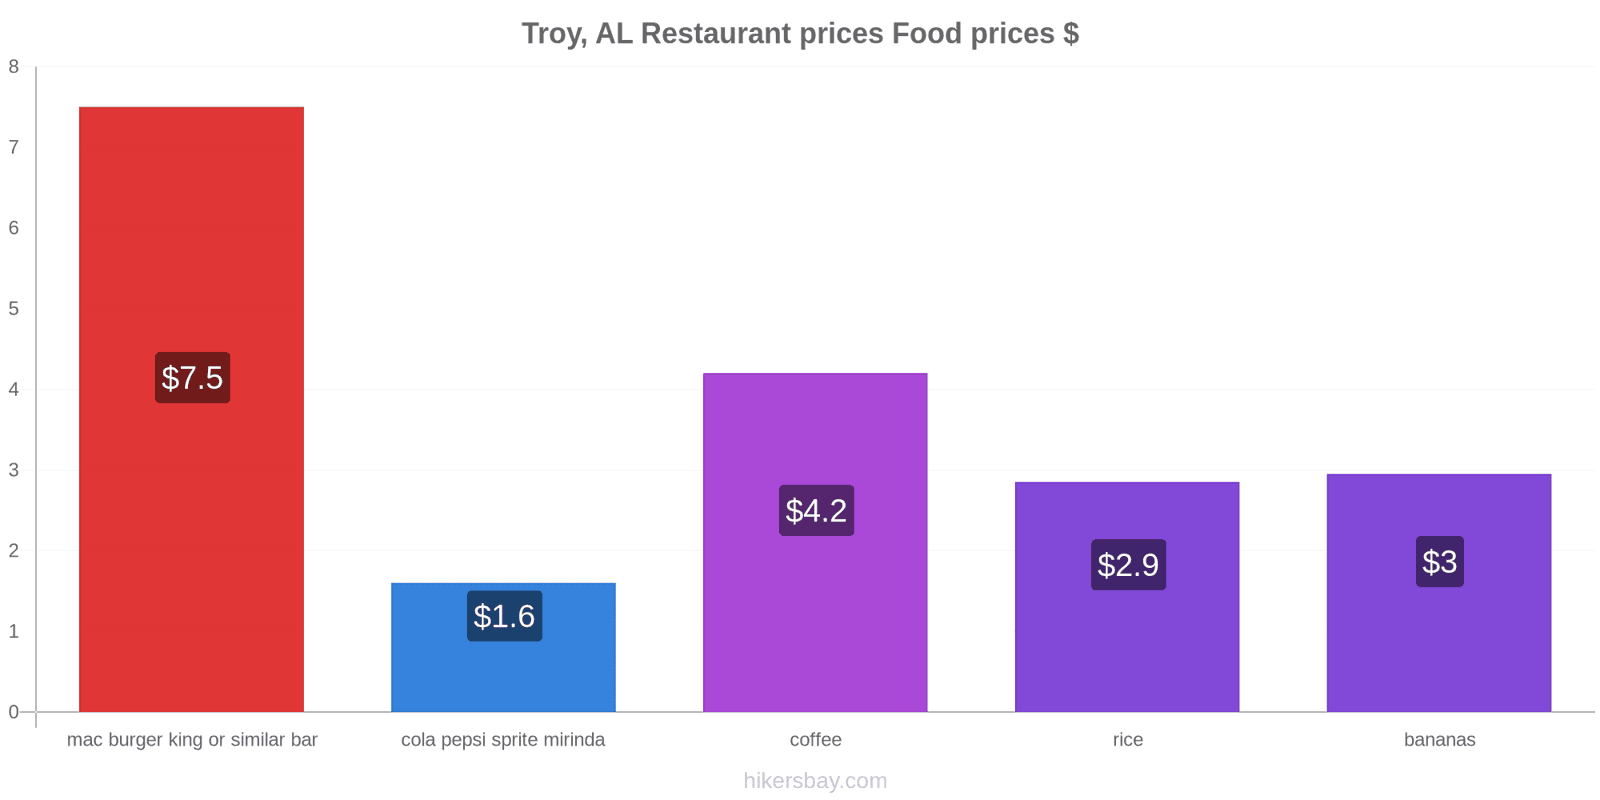 Troy, AL price changes hikersbay.com